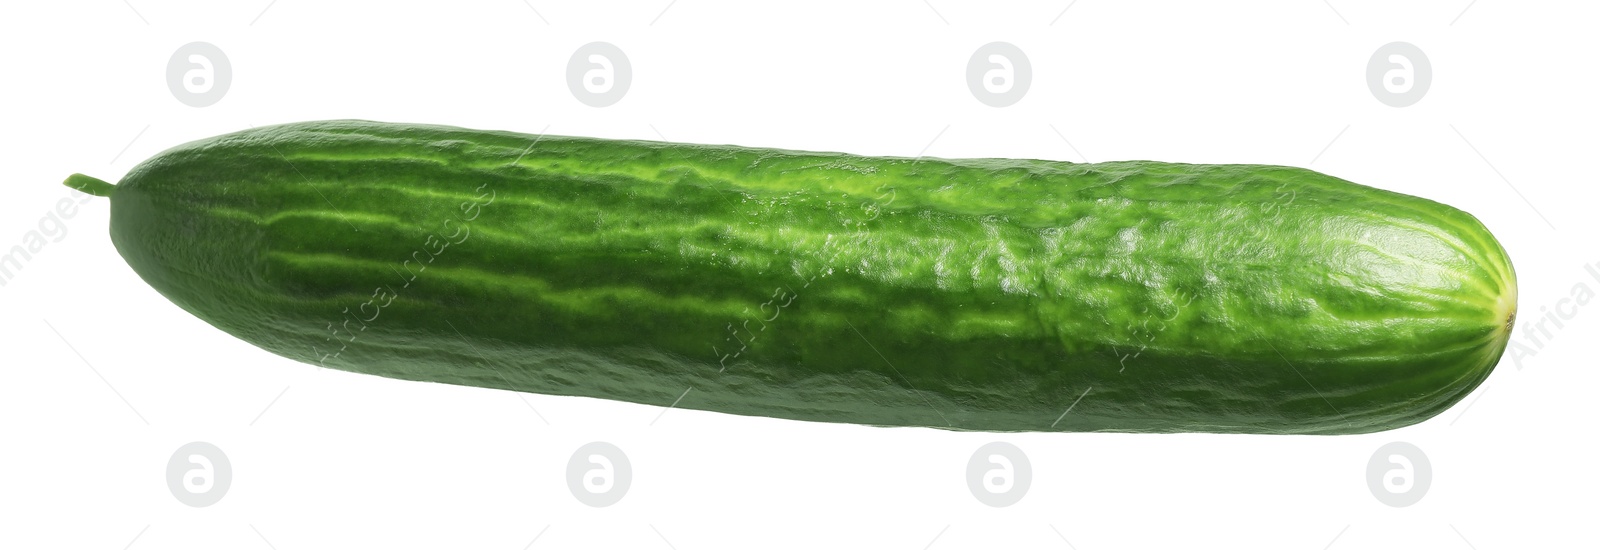 Photo of One long fresh cucumber isolated on white